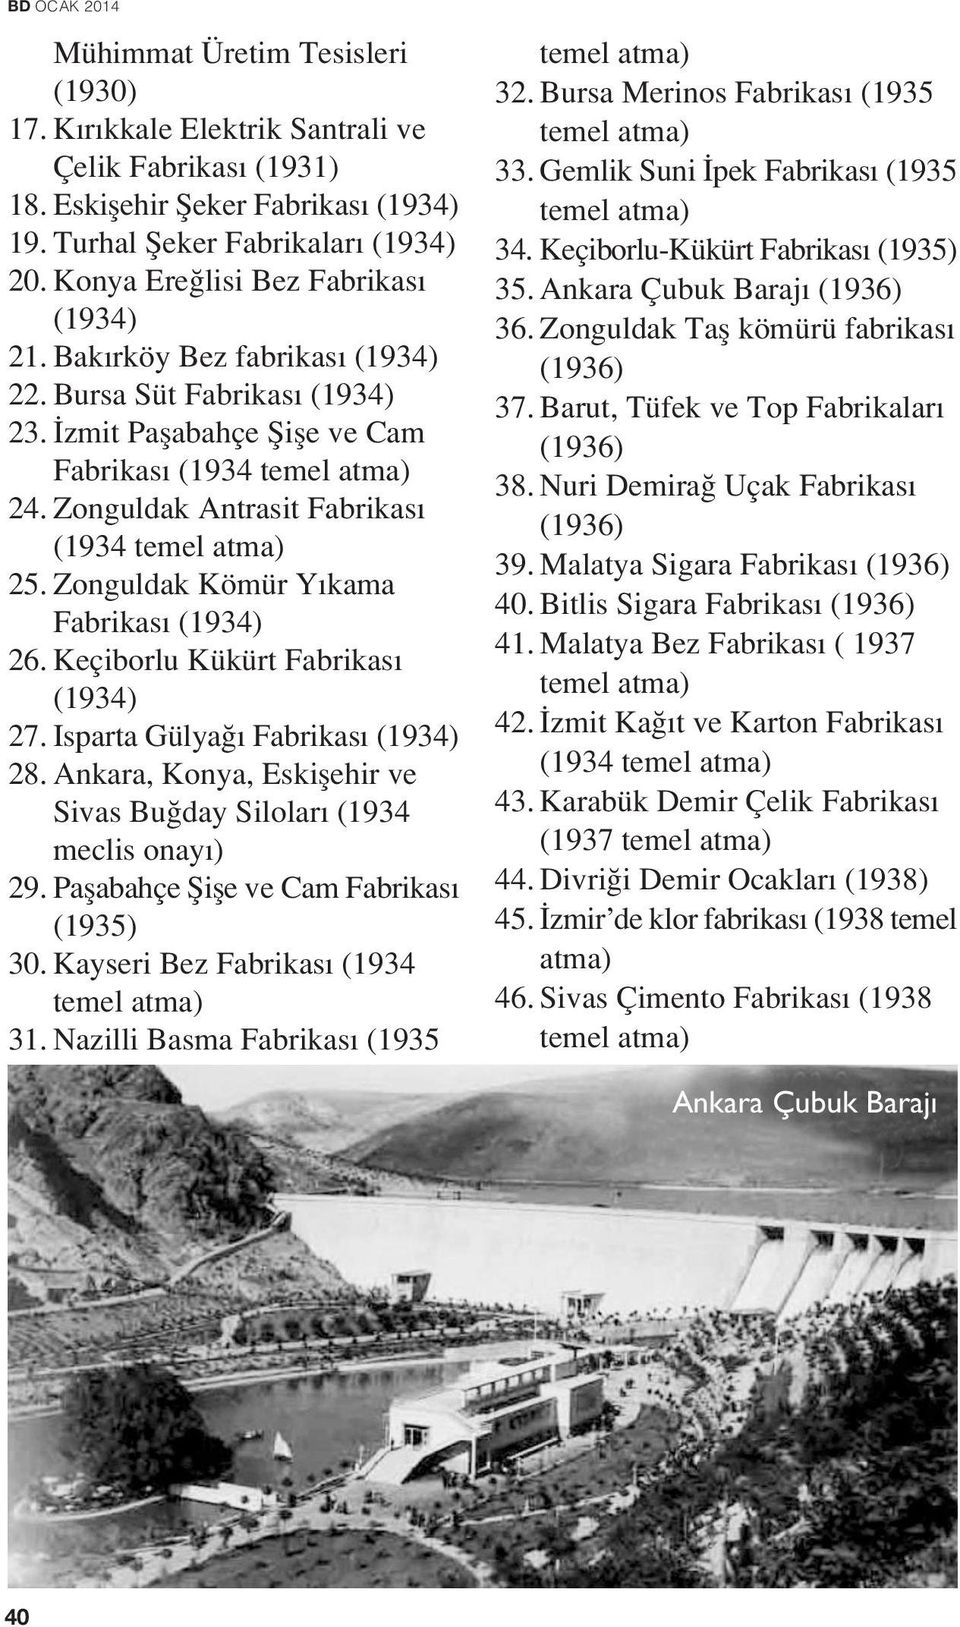 Zonguldak Kömür Y kama Fabrikas (1934) 26. Keçiborlu Kükürt Fabrikas (1934) 27. Isparta Gülya Fabrikas (1934) 28. Ankara, Konya, Eskiflehir ve Sivas Bu day Silolar (1934 meclis onay ) 29.